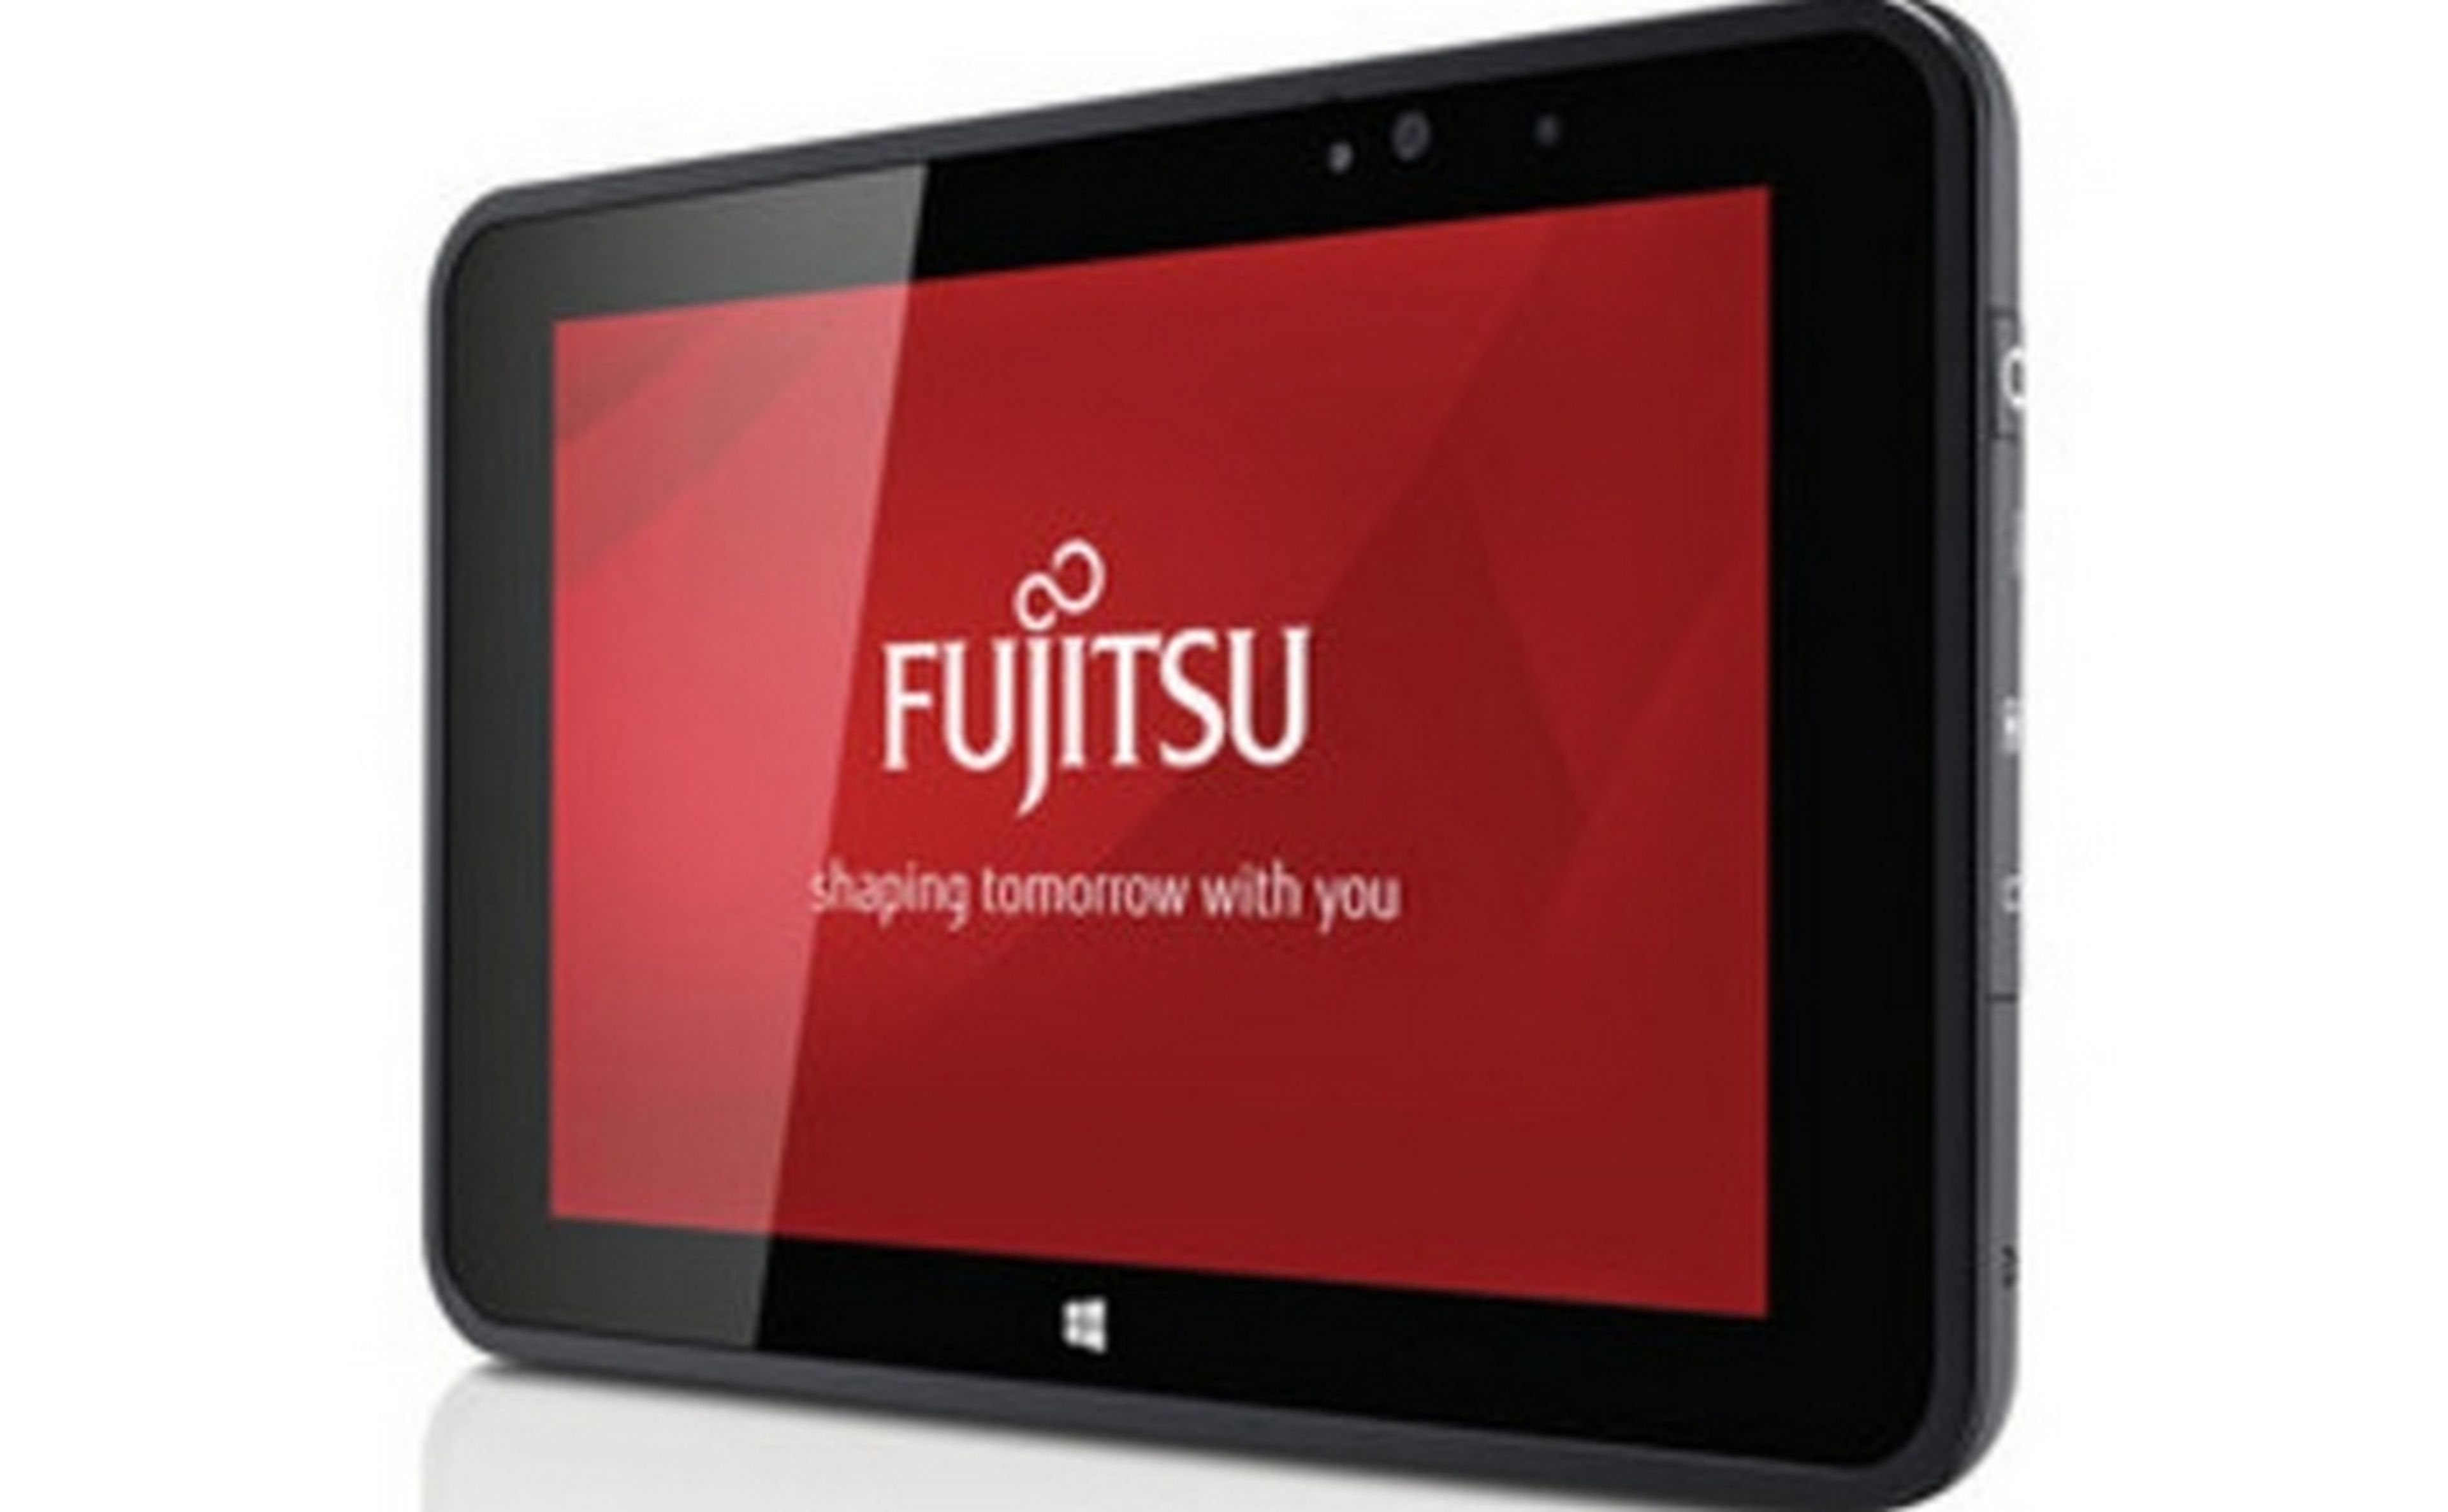 Fujitsu MWC 2015